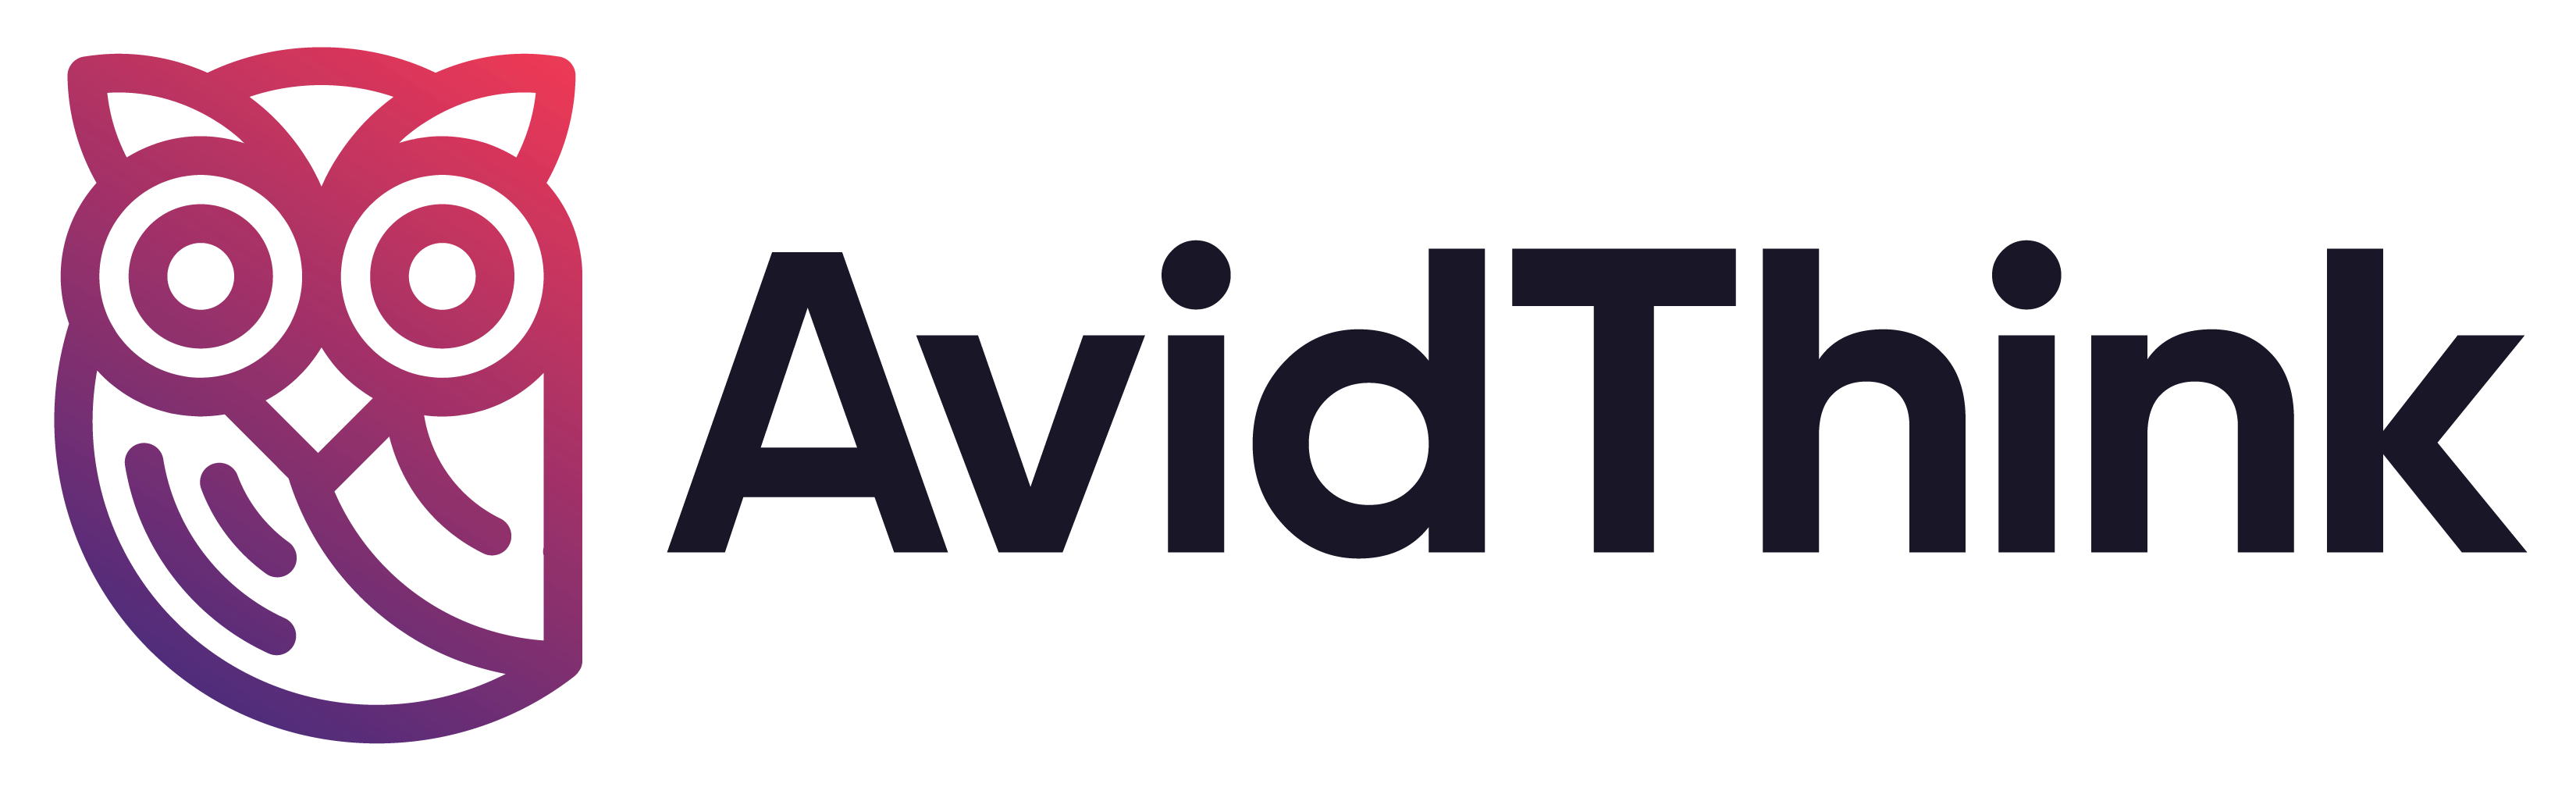 AvidThink logo